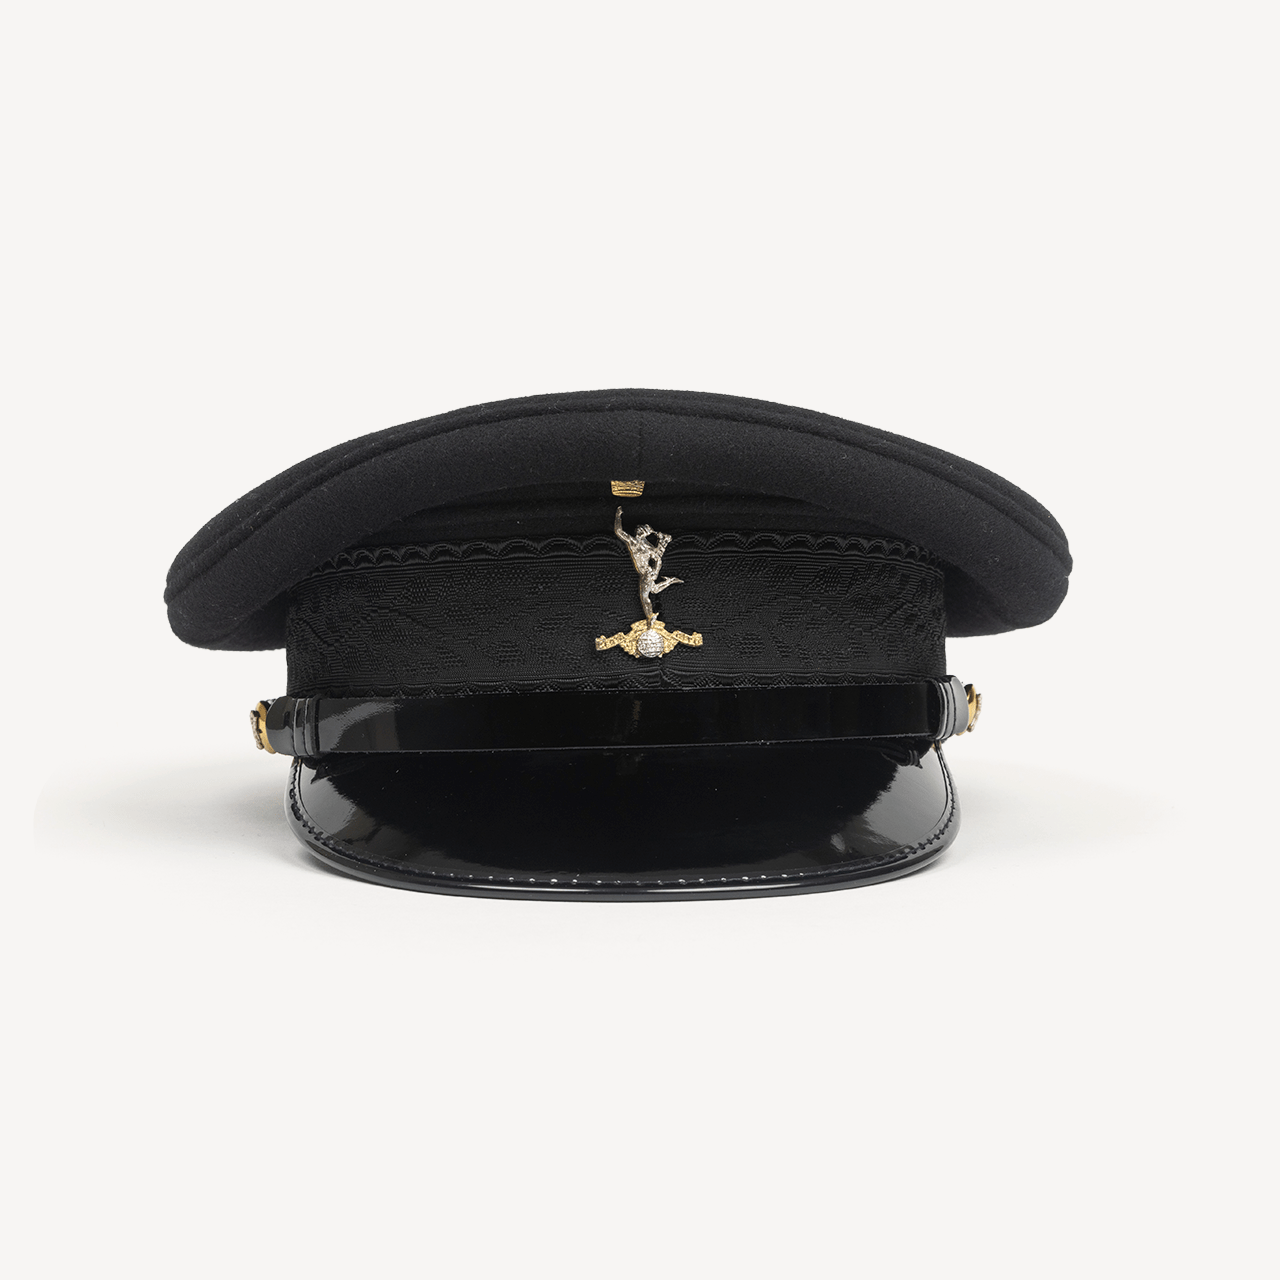 No.1 SERVICE DRESS HATS WITH PLAIN PEAKS - Swaine